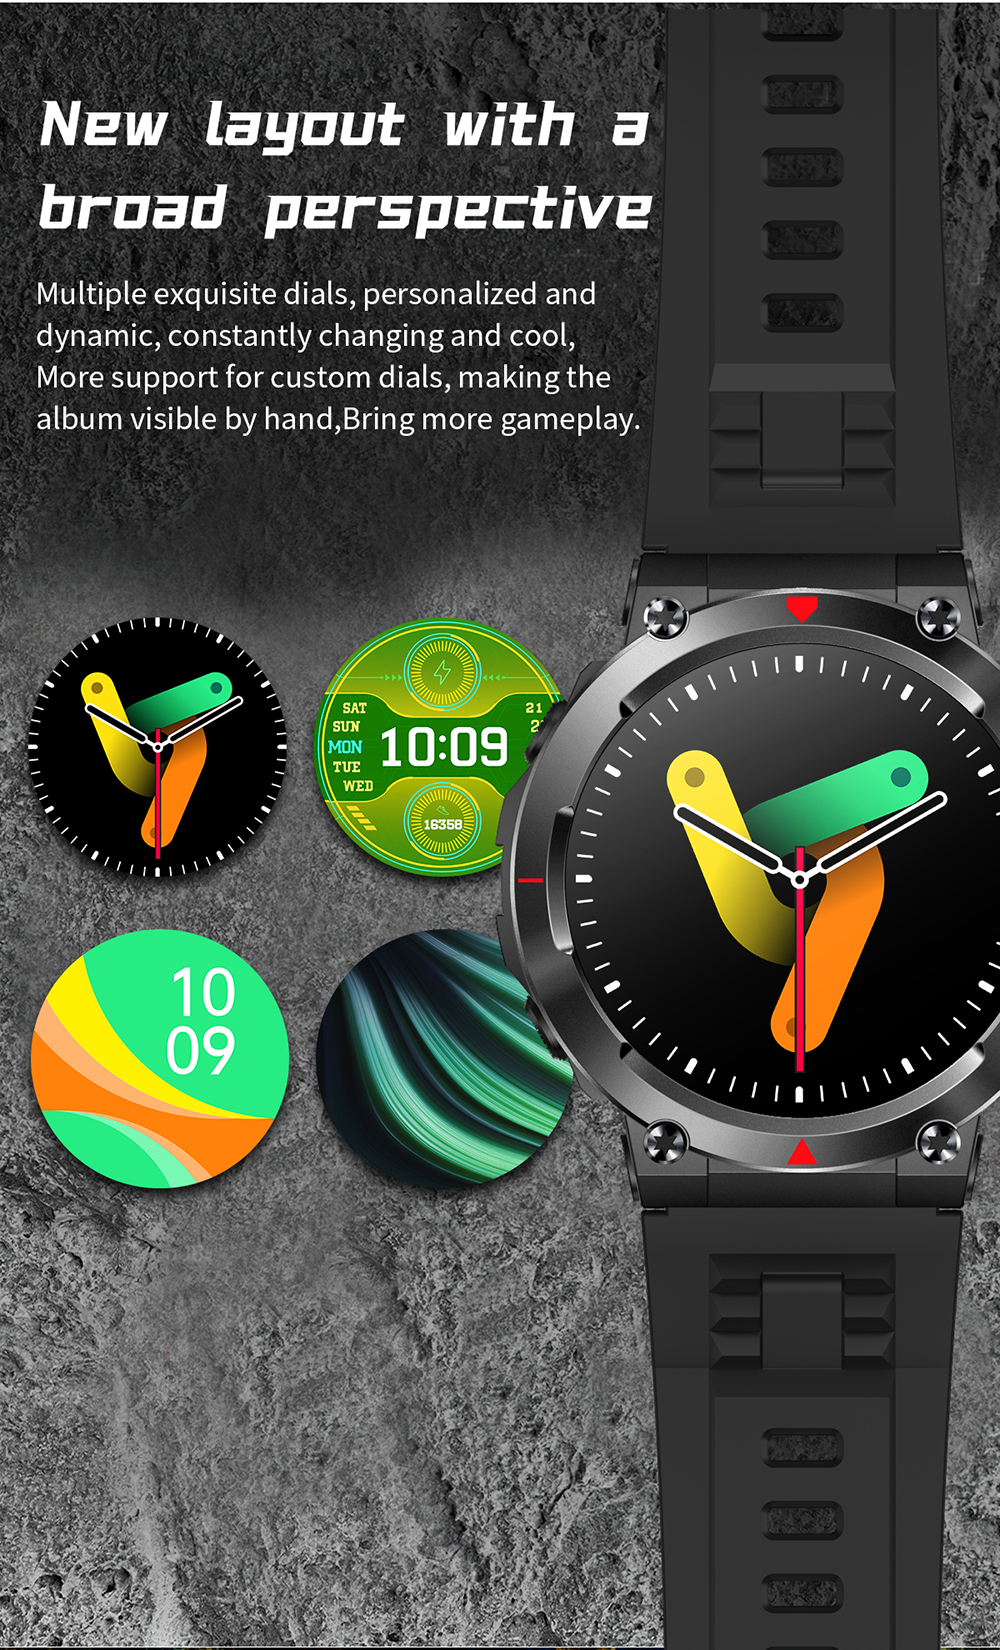 COLMI V70 Smartwatch 1.43" AMOLED Ratidza Bluetooth Call Fitness Smart Watch